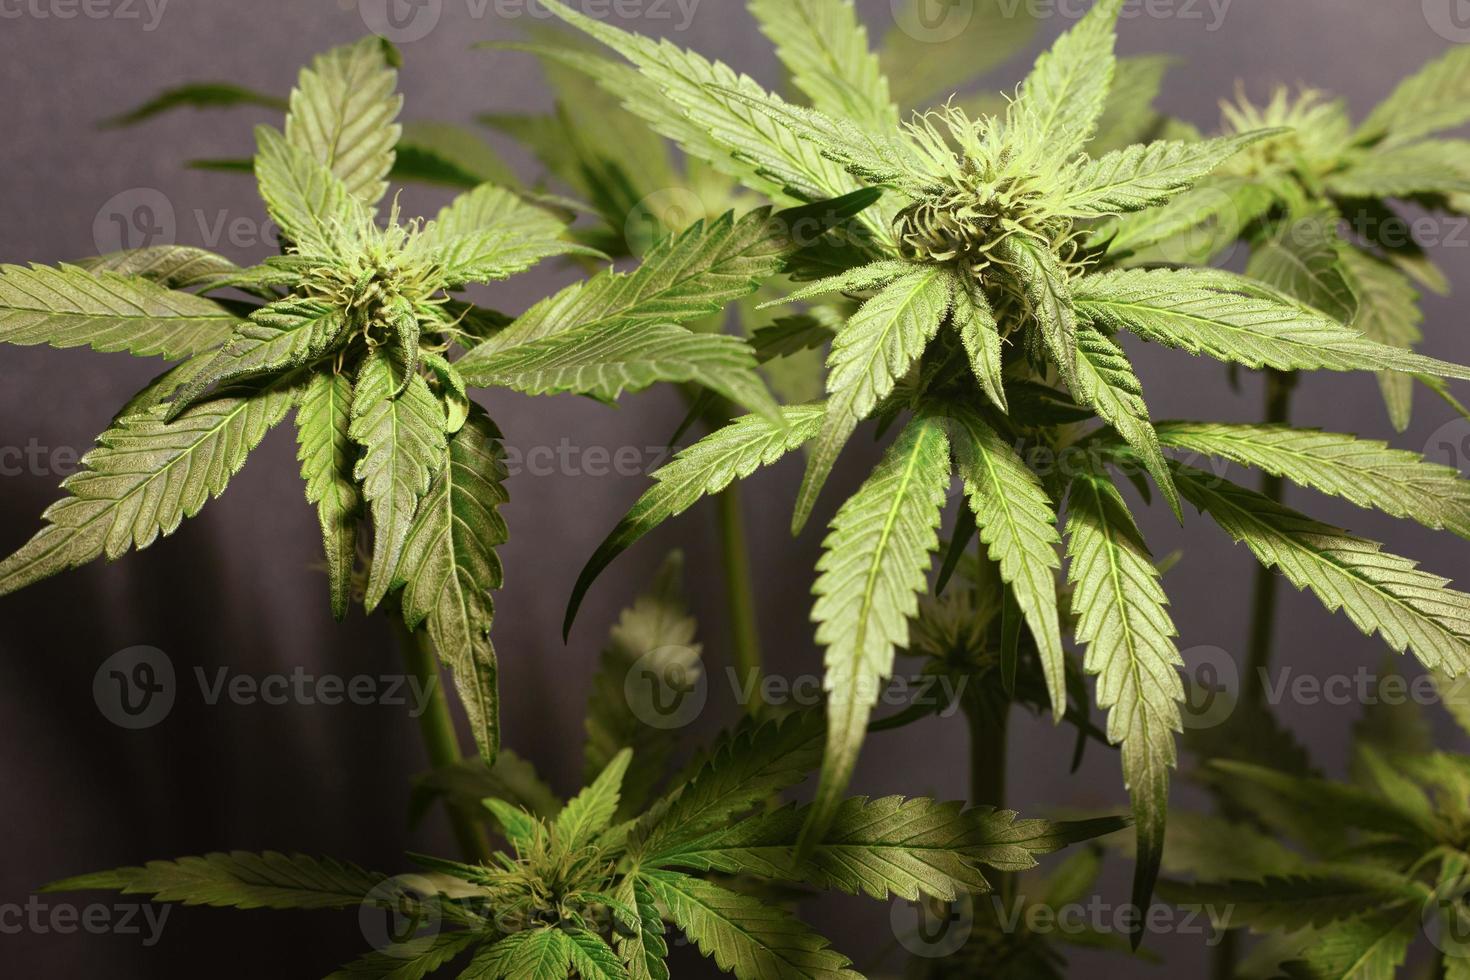 binnenshuis groene cannabistoppen kweken, medicinale marihuana kweken foto